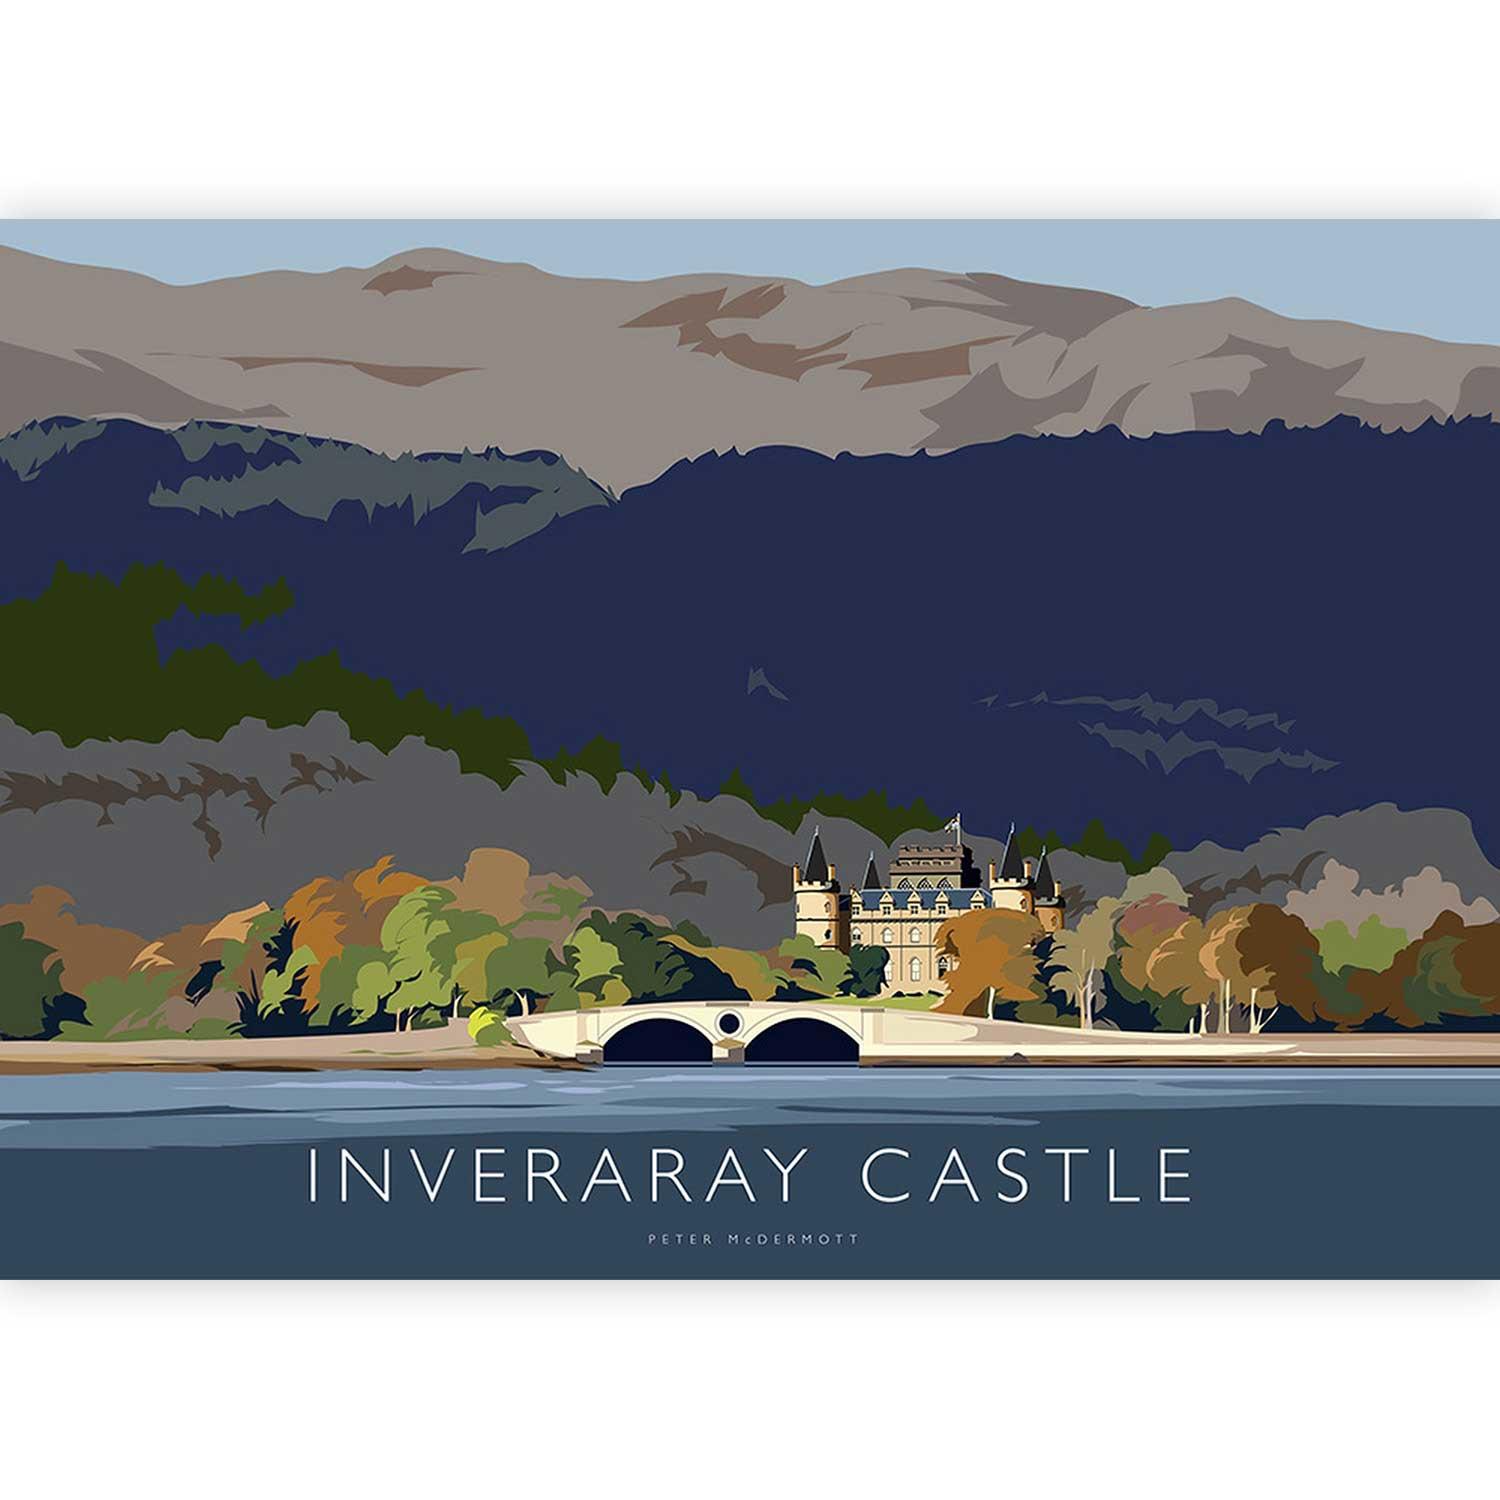 Inveraray Castle by Peter McDermott